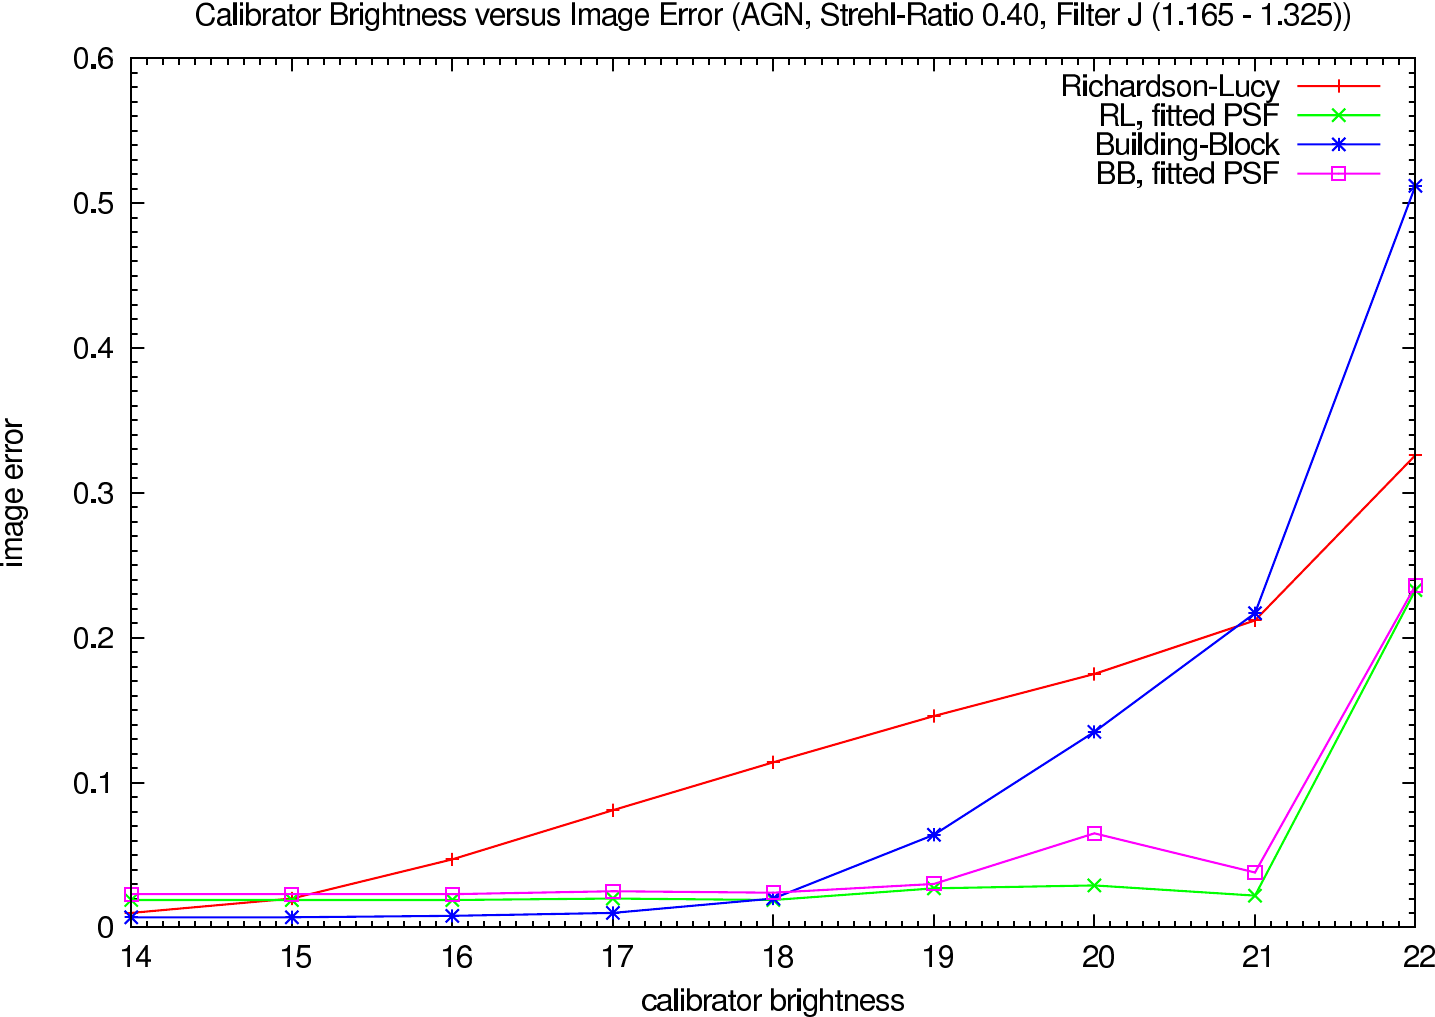 Image errors depending on the calibrator brightness, strehl ratio 0.40, J-Band